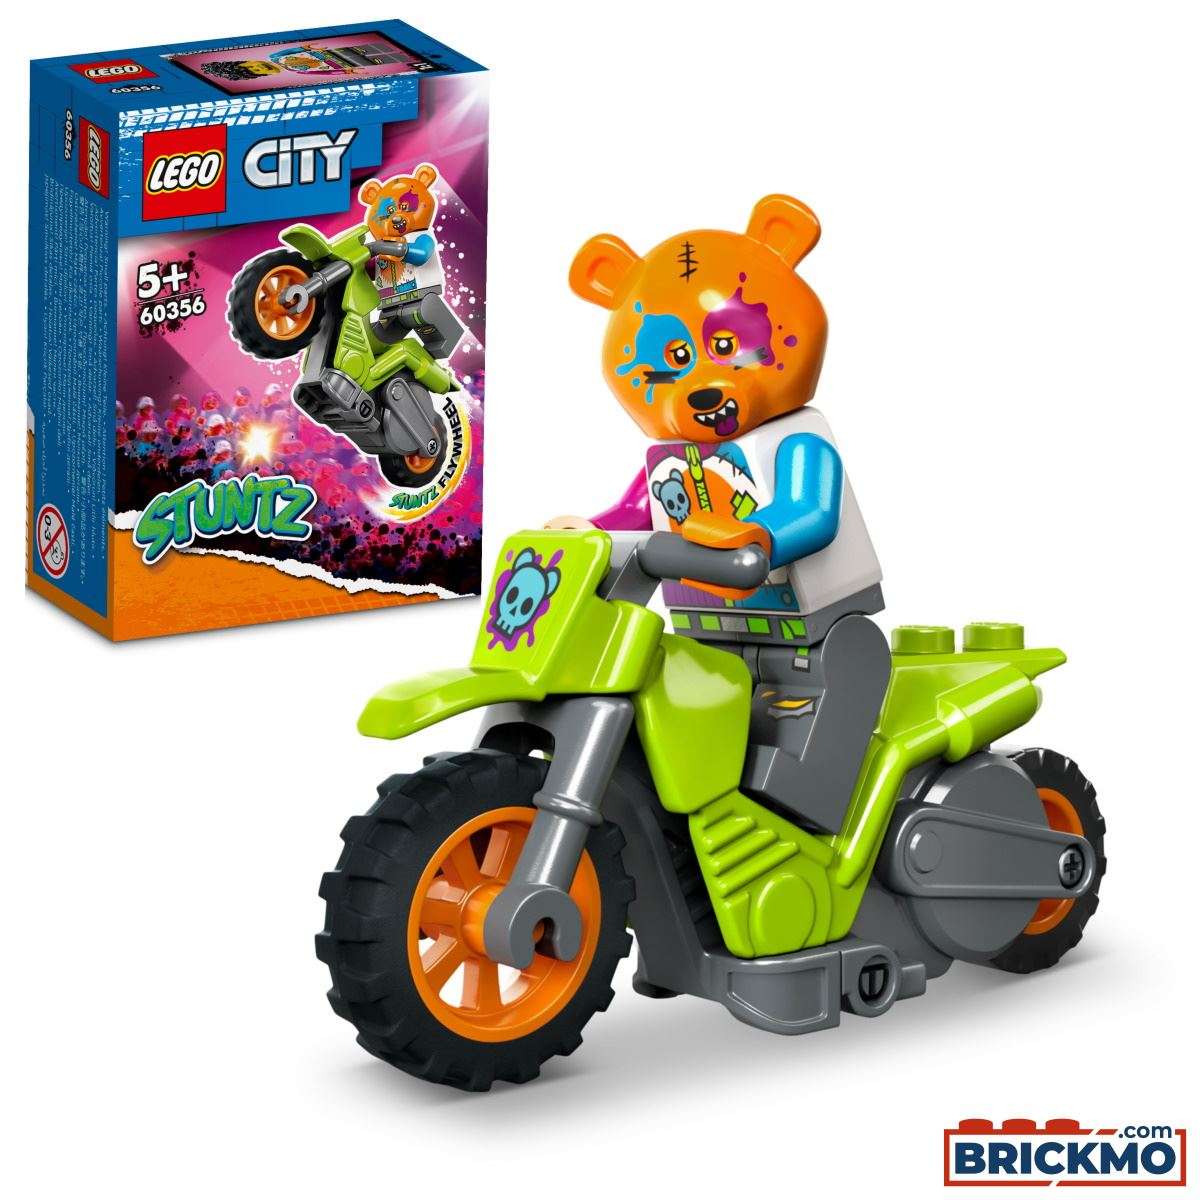 LEGO City 60356 Bären-Stuntbike 60356